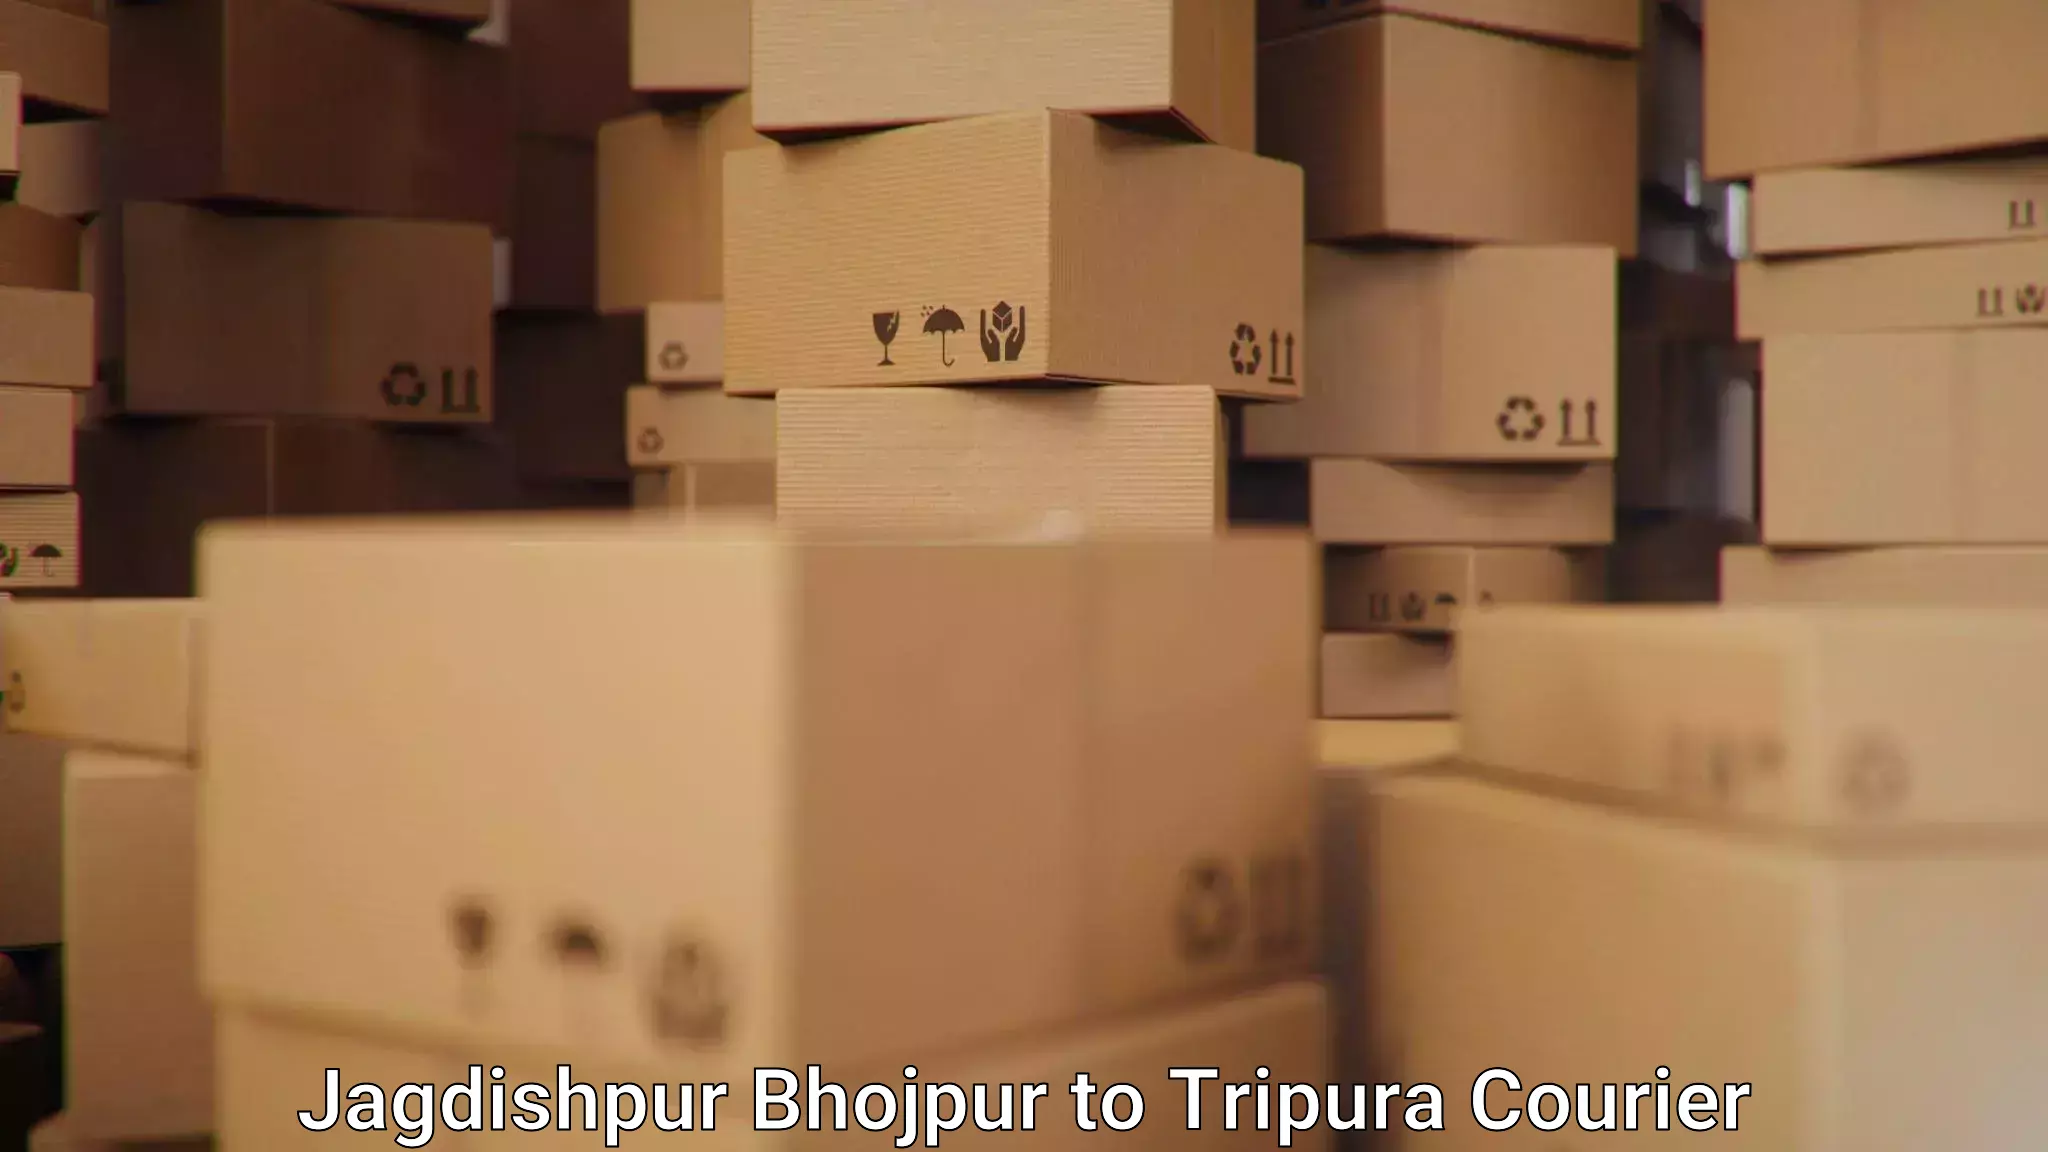 Courier service innovation Jagdishpur Bhojpur to South Tripura